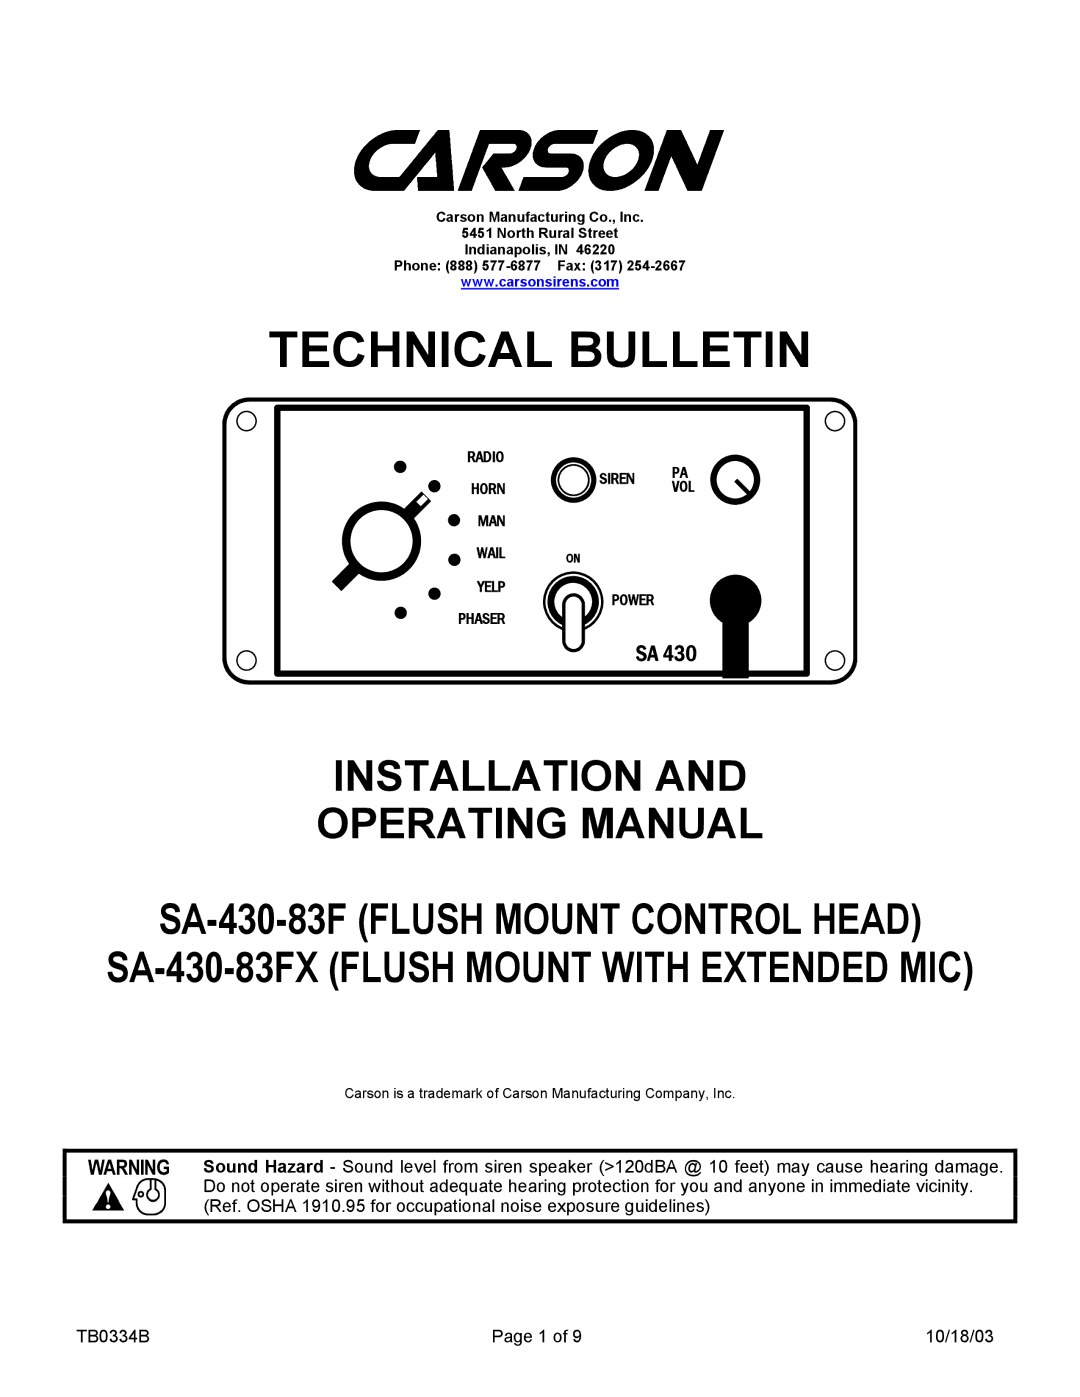 Carson SA-430-83FX manual Technical Bulletin 